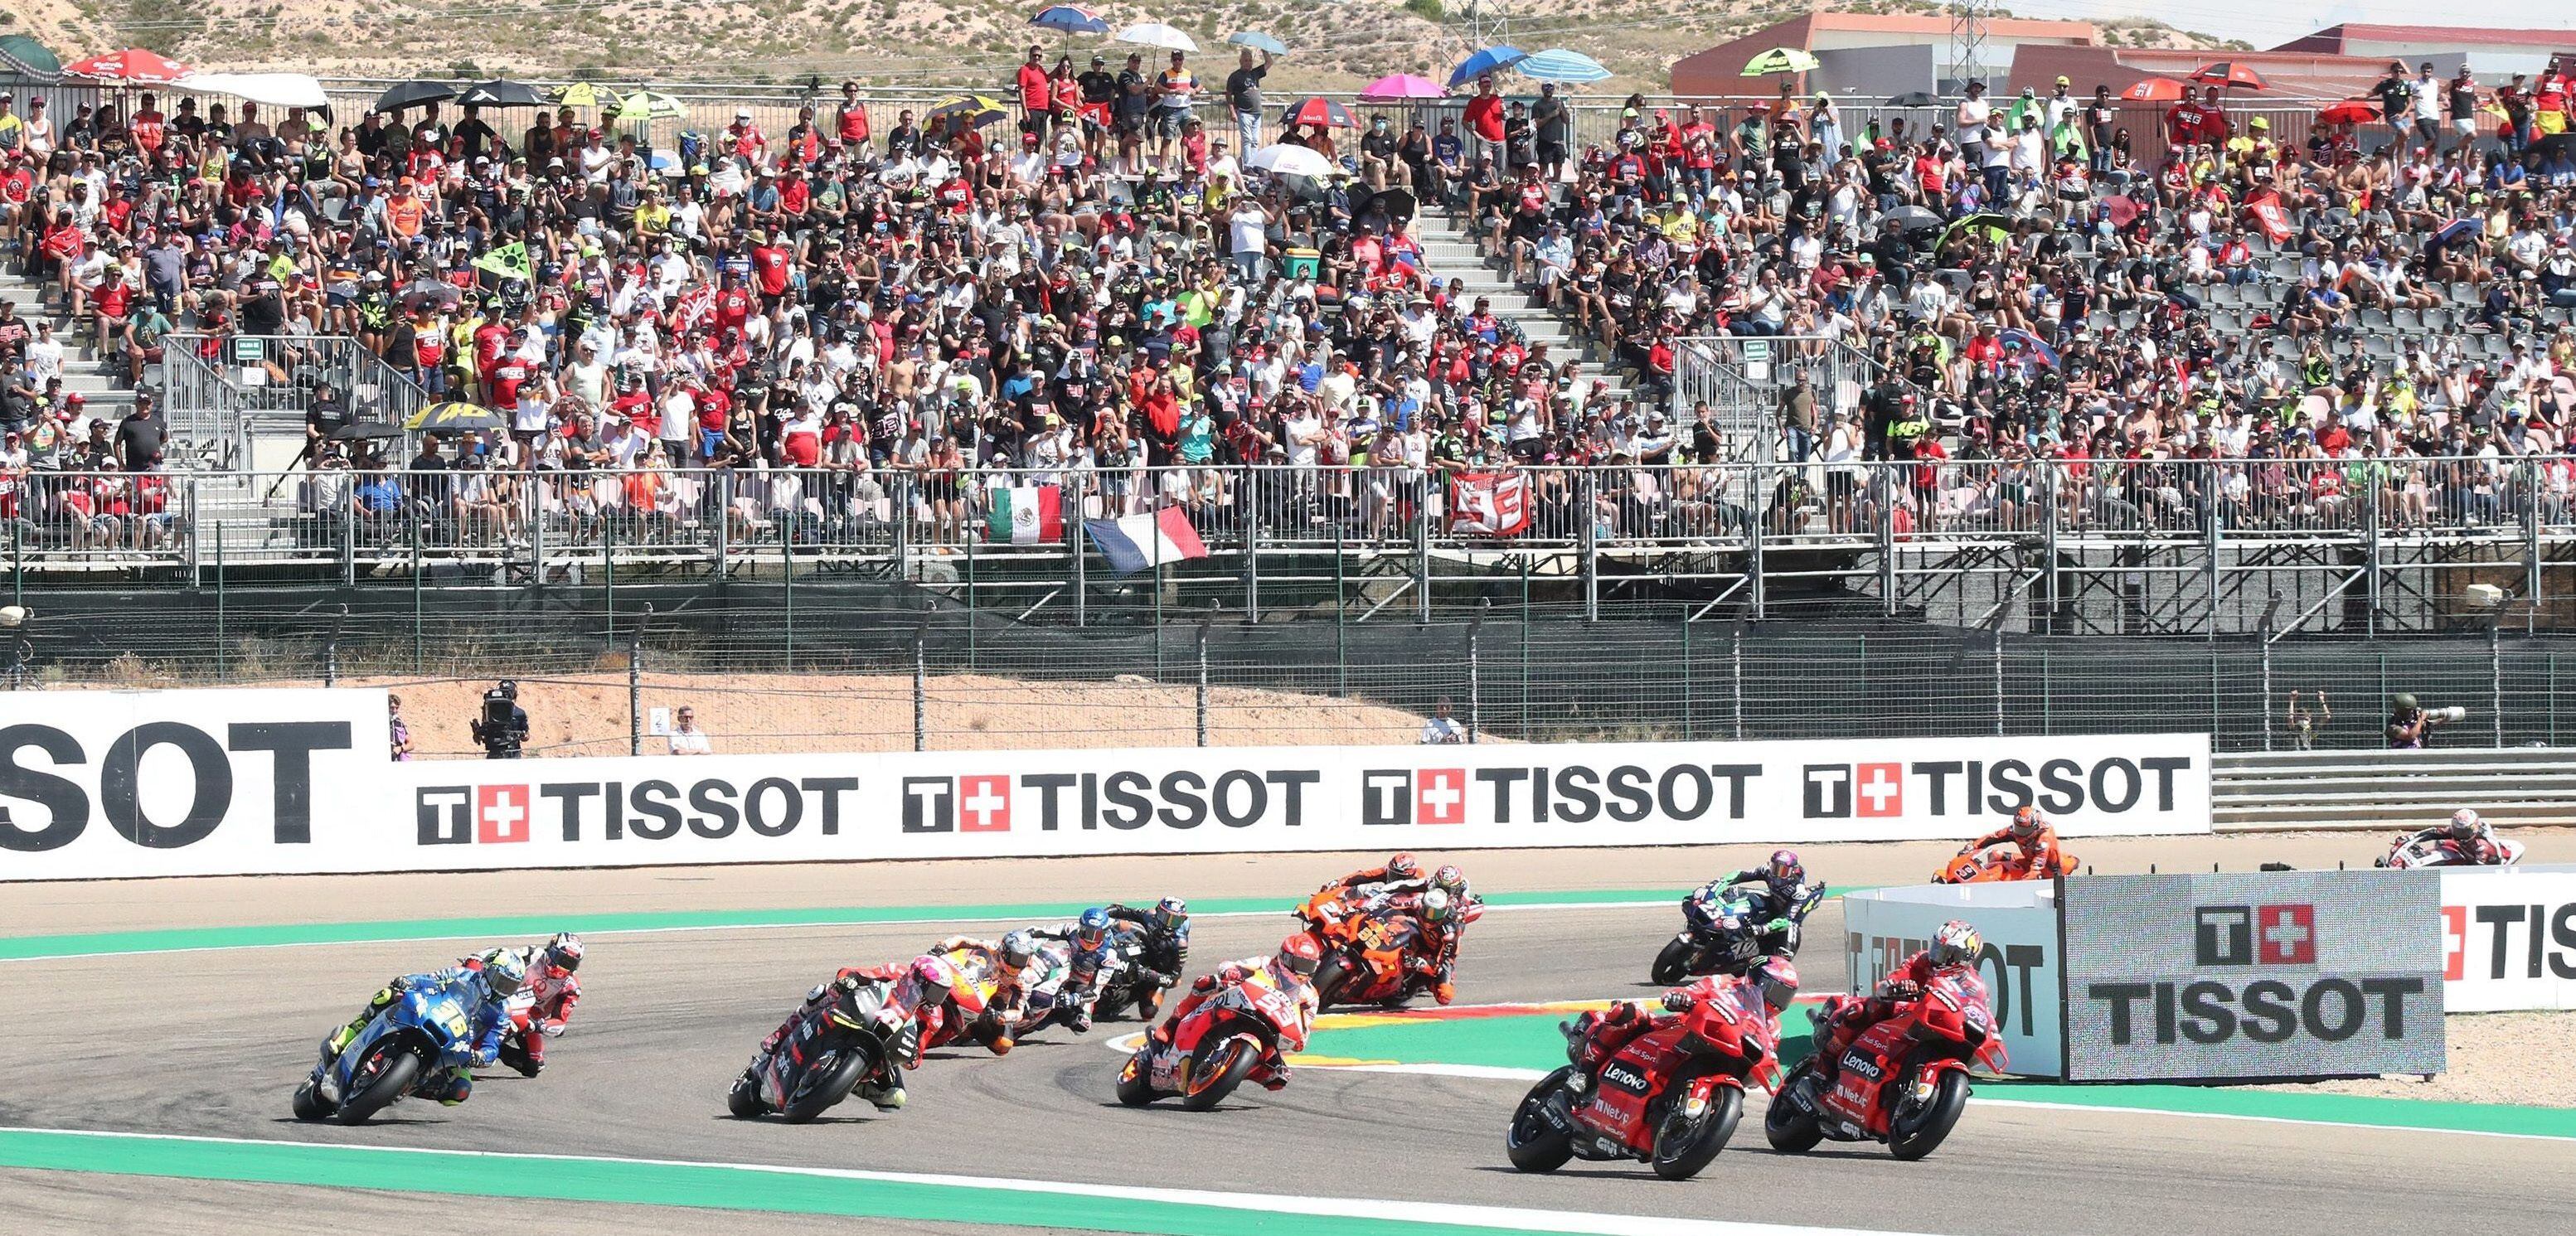 Inicio de la carrera de MotoGP en Alcañiz, que acogió a 13.578 espectadores.